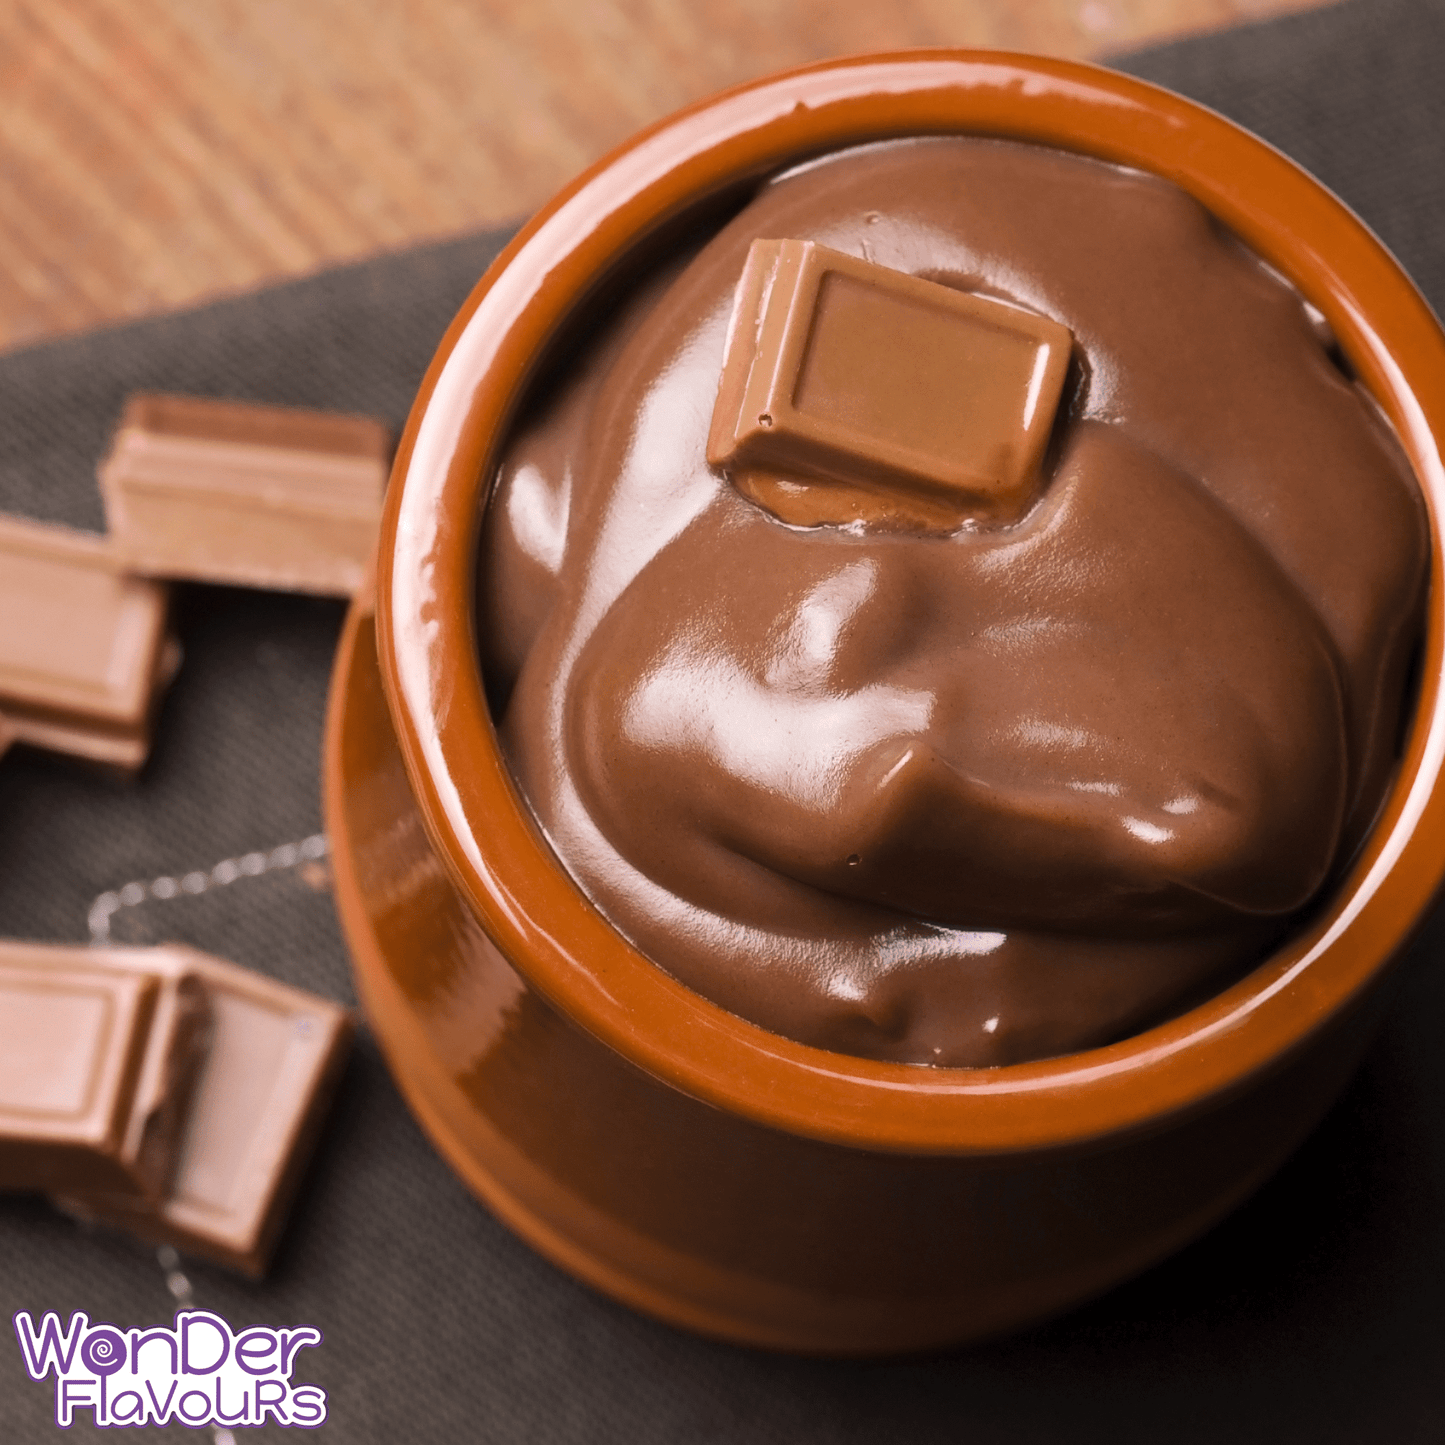 Pudding (Milk Chocolate) SC - Flavour Concentrate - Wonder Flavours